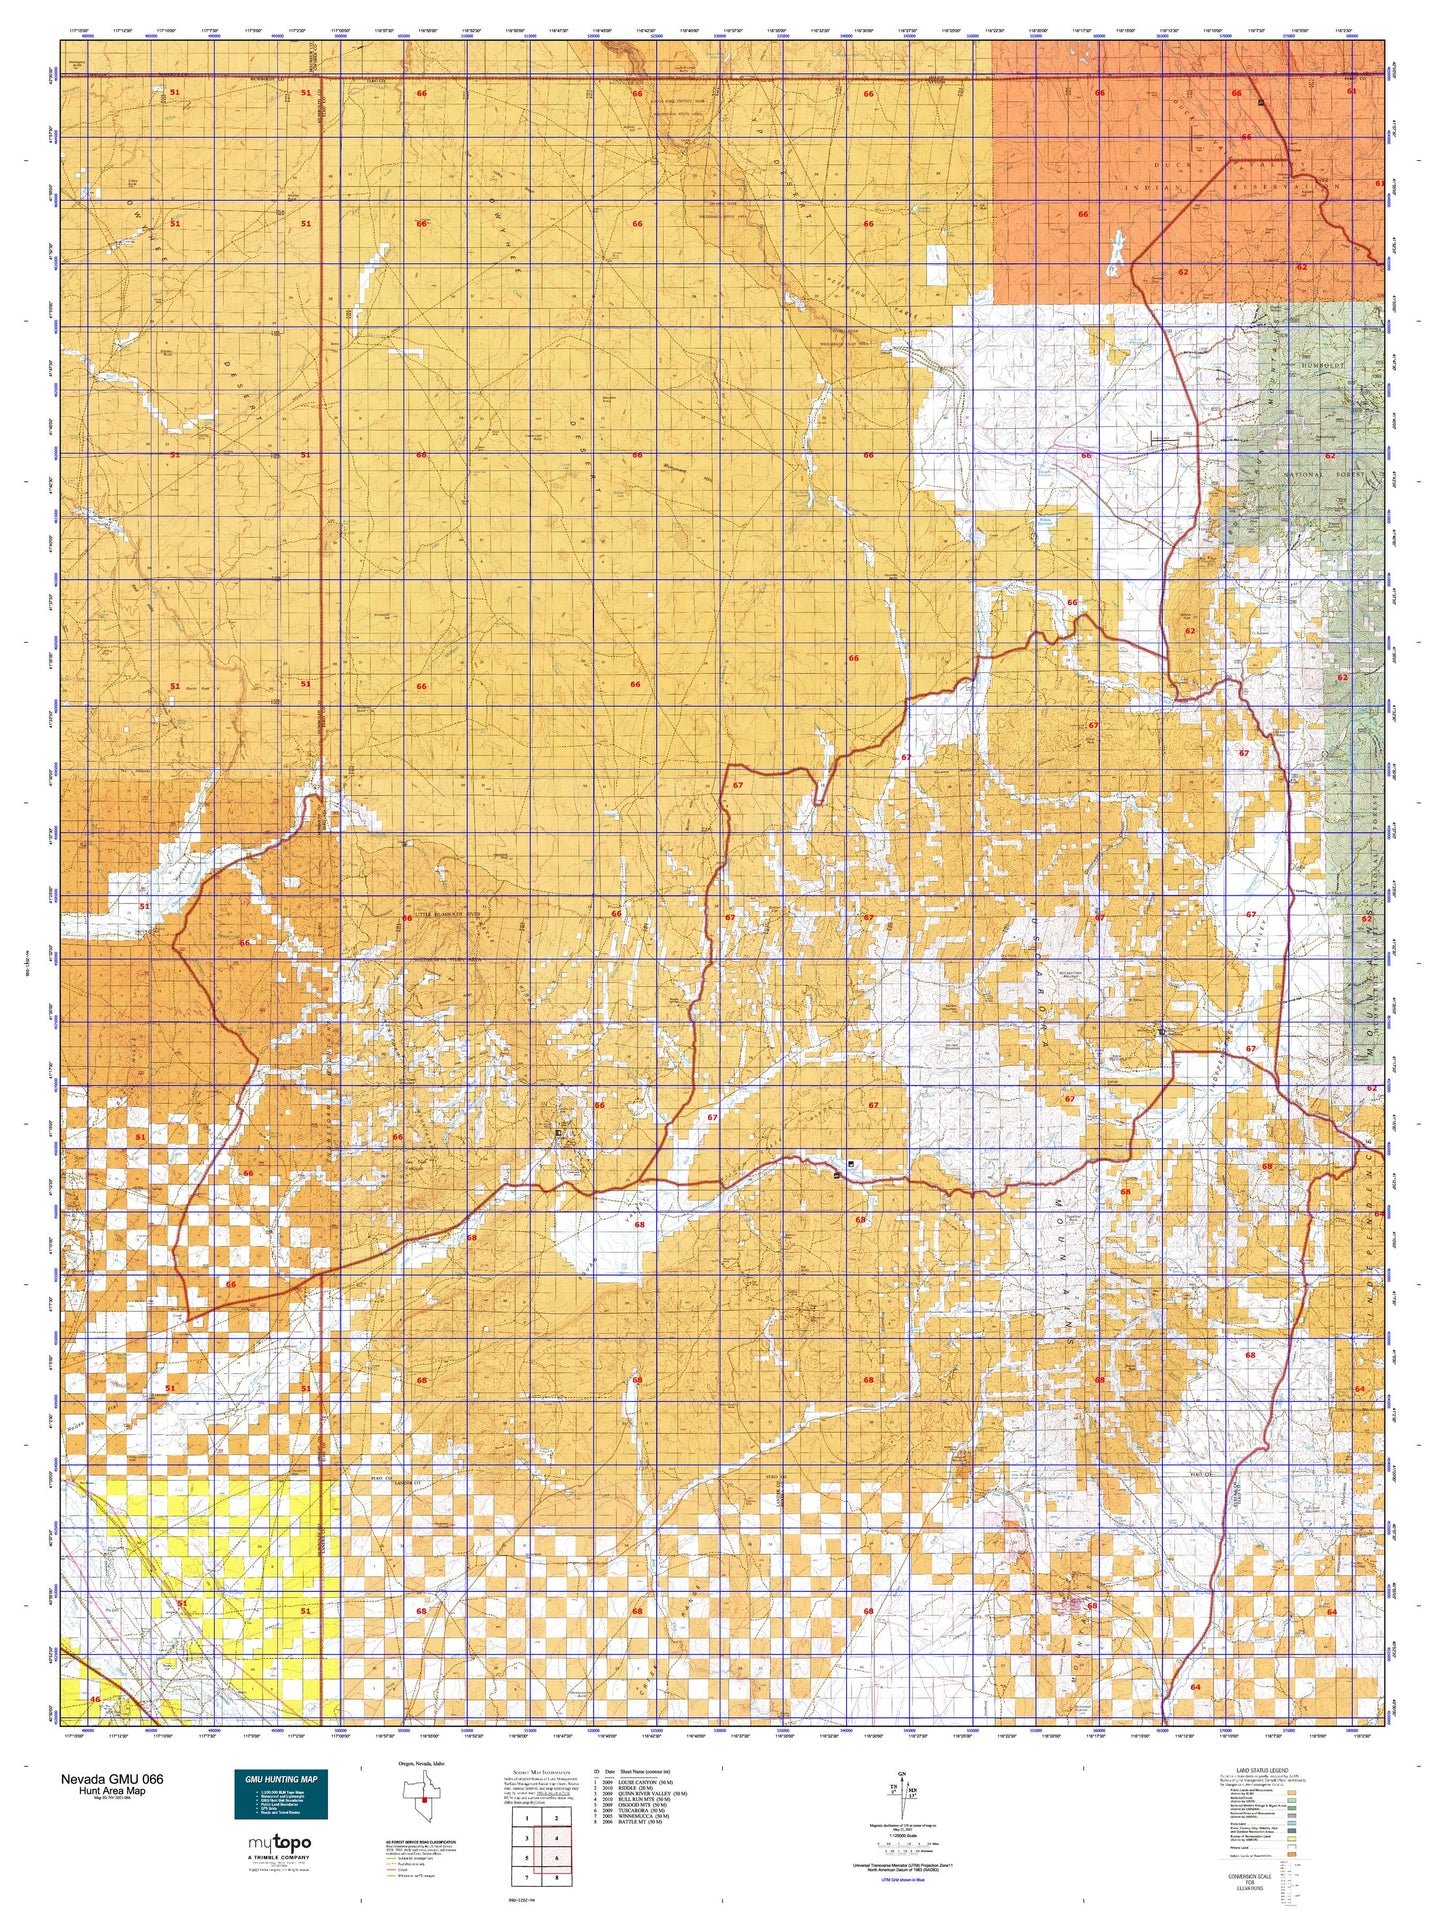 Nevada GMU 066 Map Image